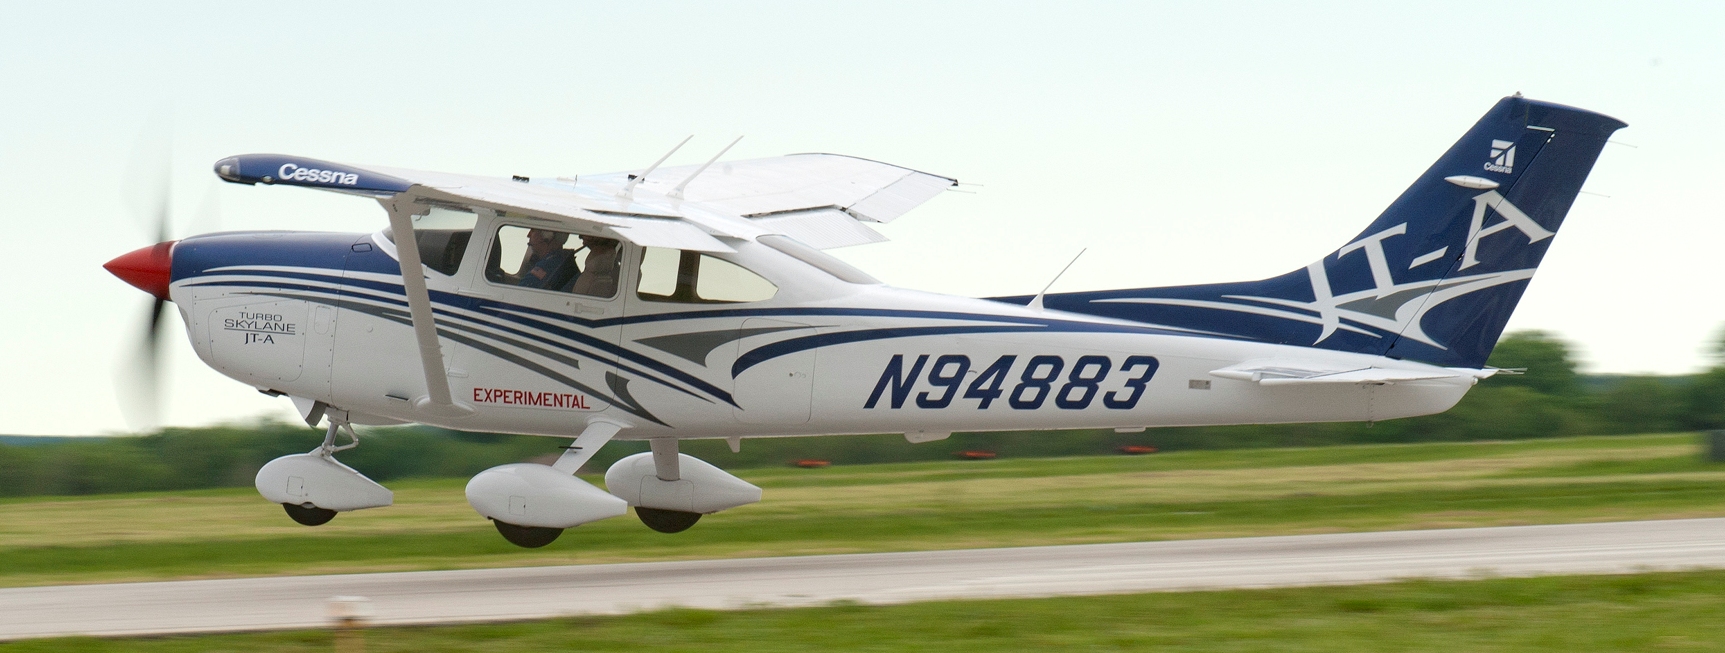 Cessna Turbo Skylane JT-A Takes First Production Flight